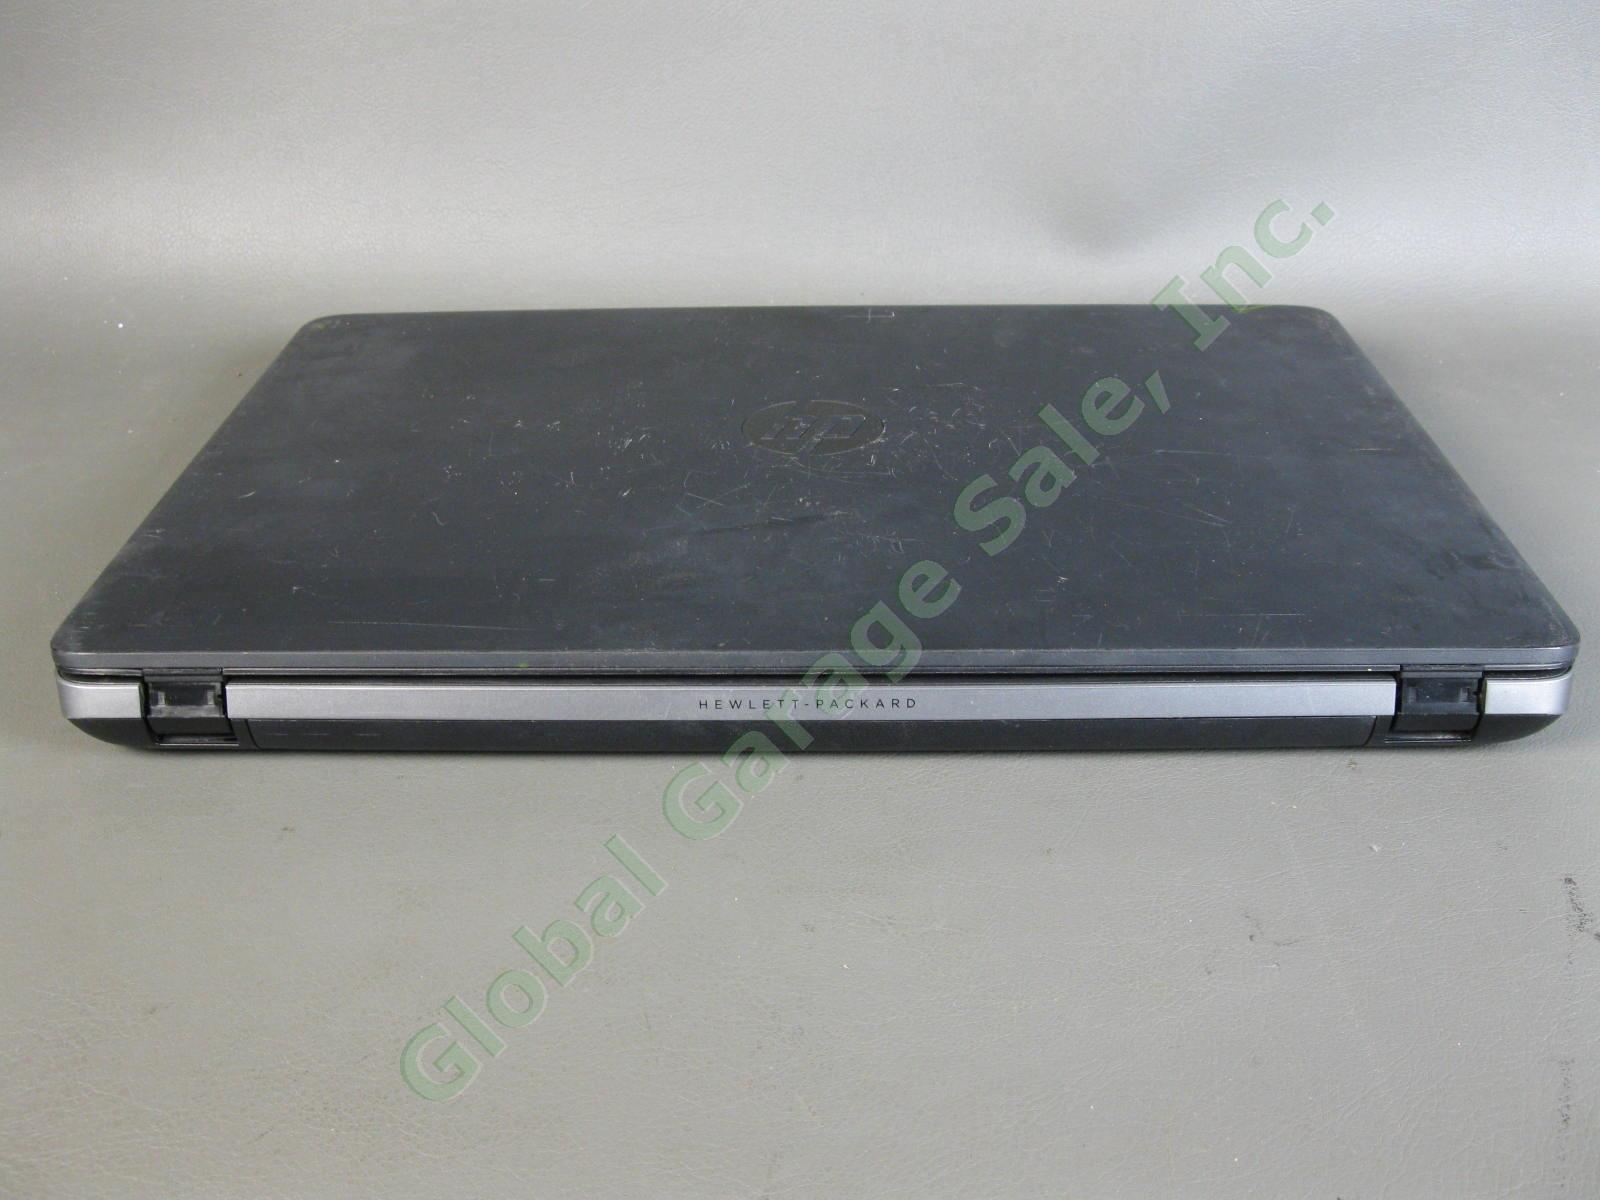 HP ProBook 450 G1 Laptop Computer i5-4200M 4GB 500GB Win10 WIFI DVD Webcam Power 4